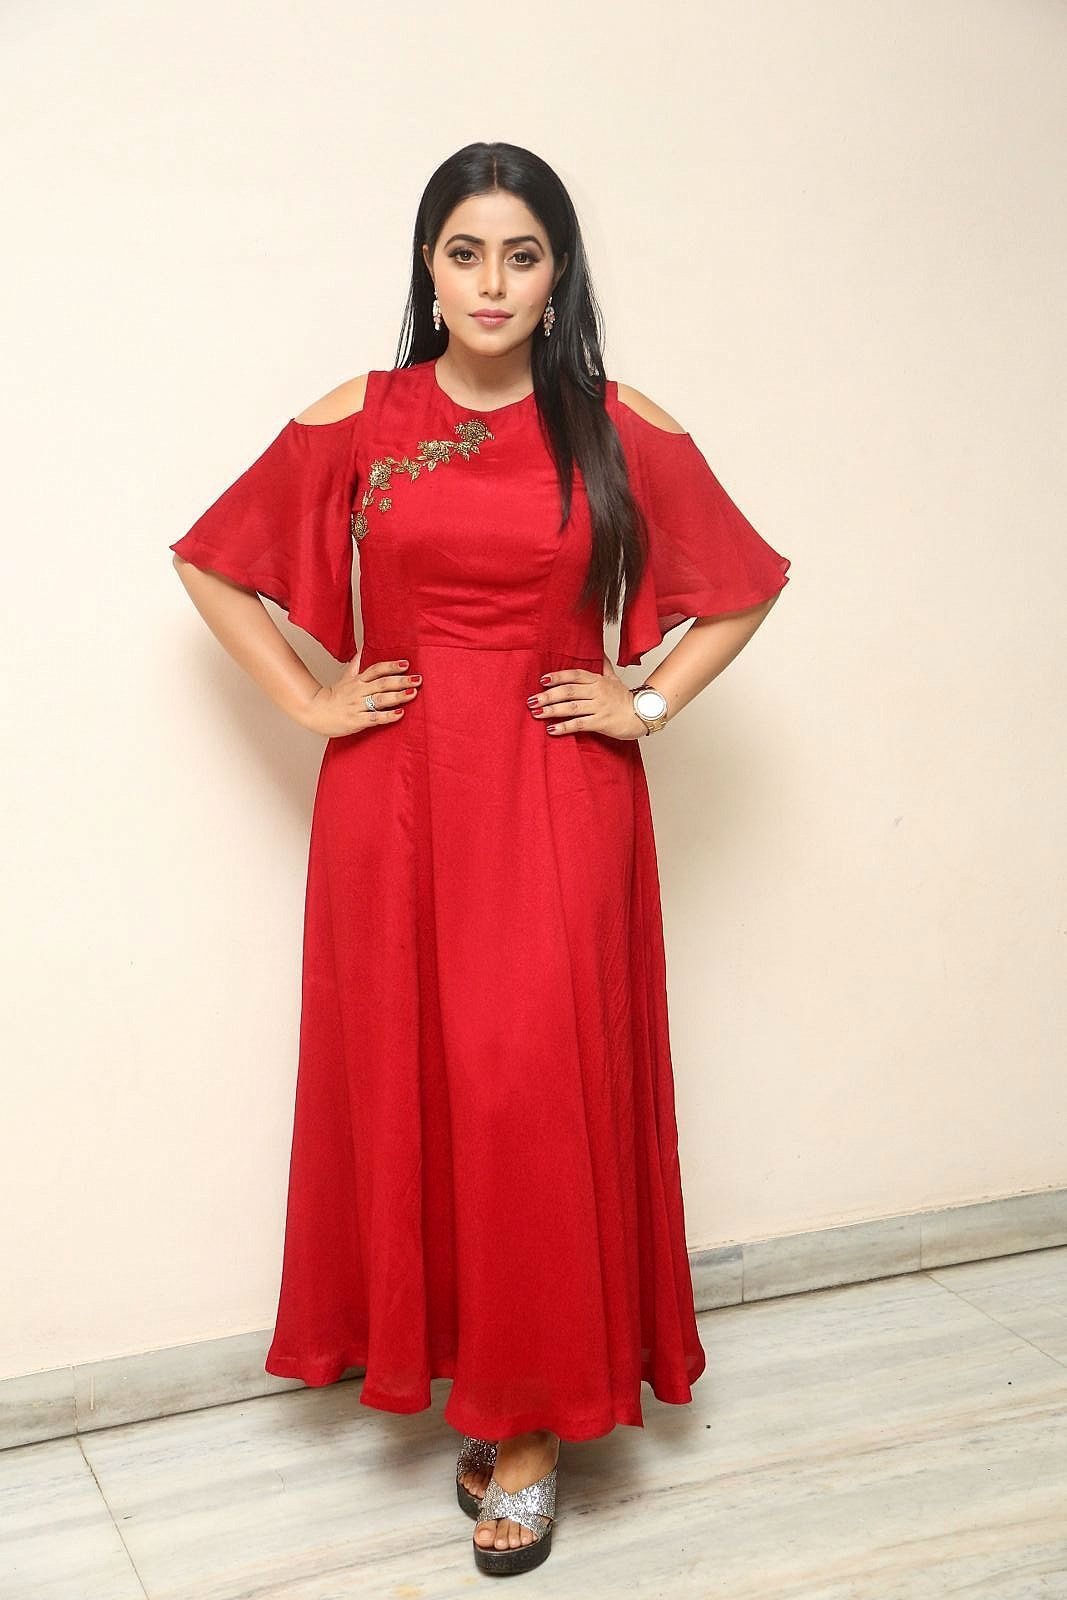 Actress Poorna aka Shamna Kasim Stills at Rakshasi Movie Audio Launch | Picture 1500433